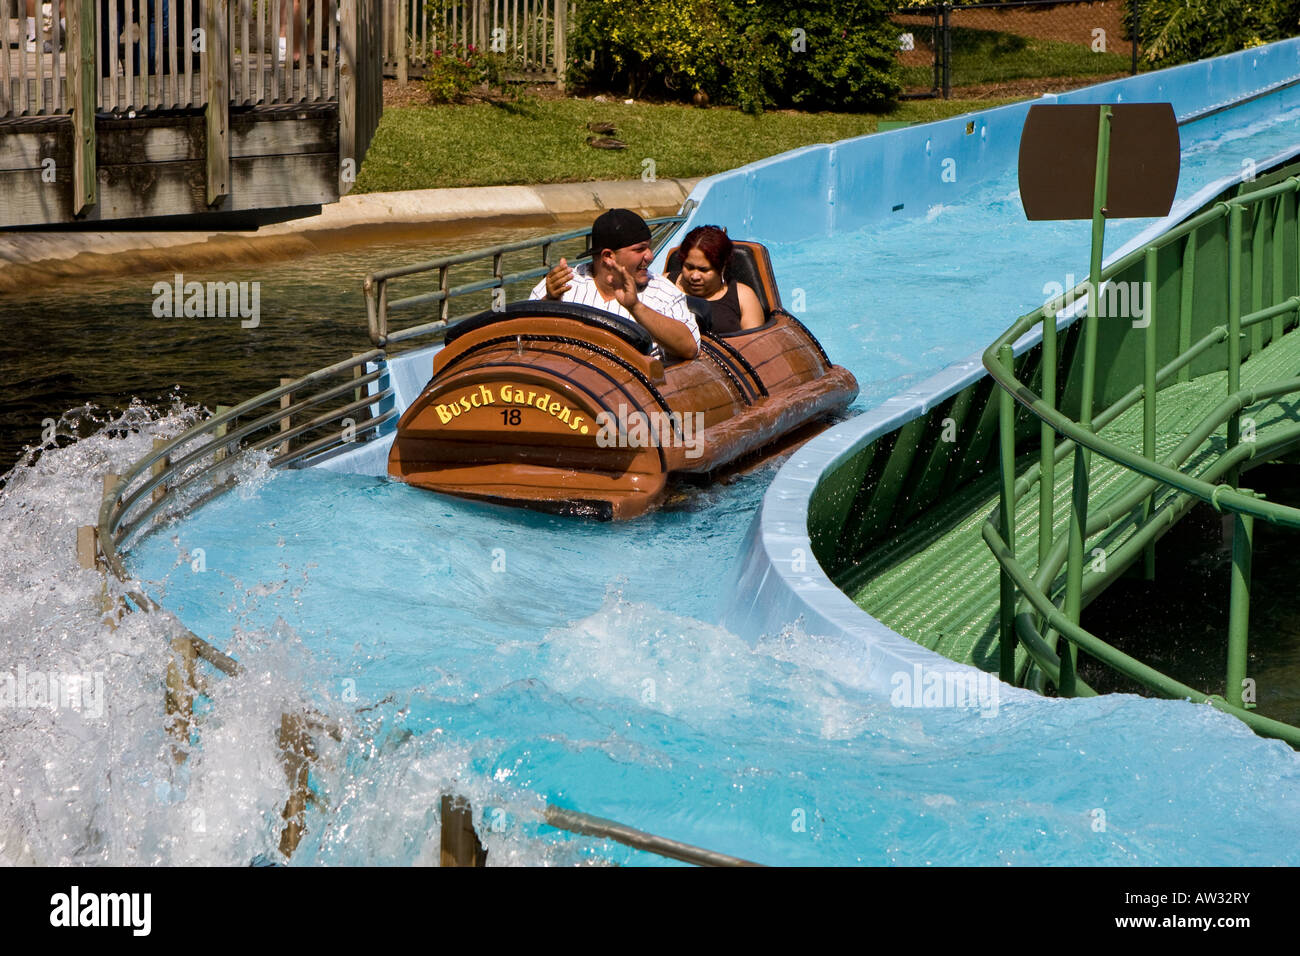 Busch Gardens Log Flume Ride Stock Photo 16449278 Alamy